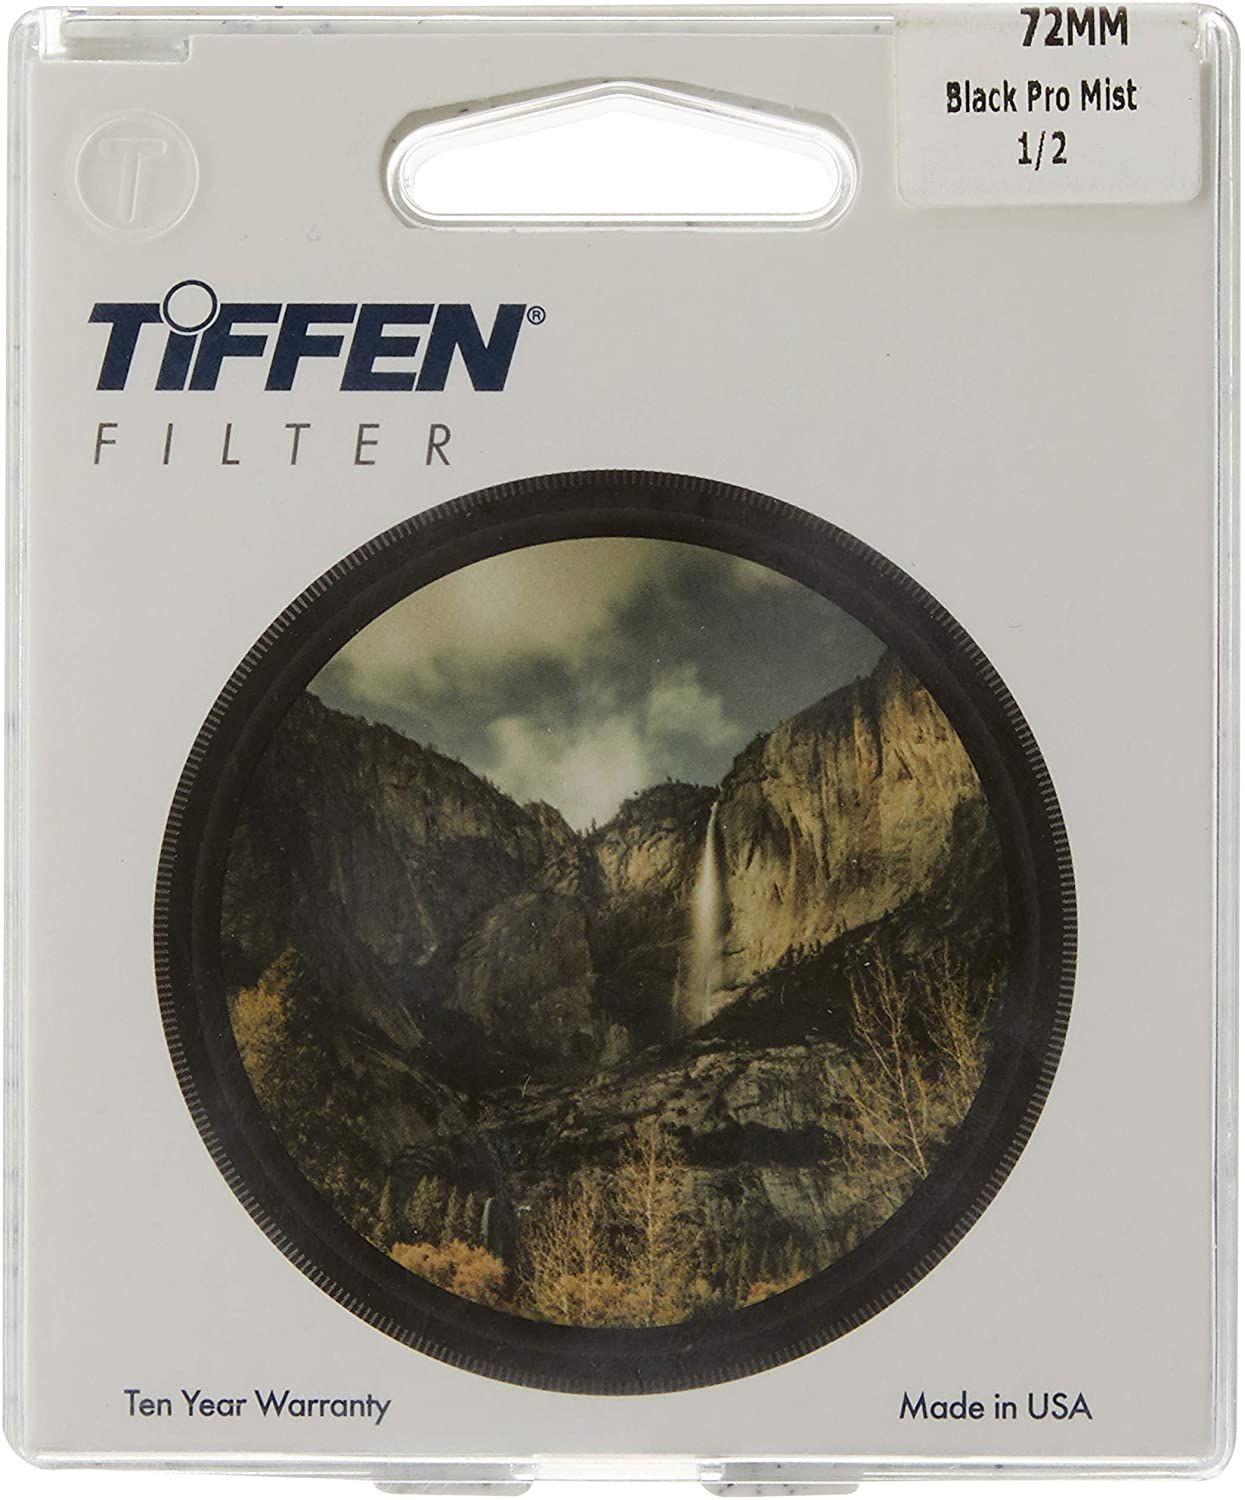 The Tiffen Black Pro-Mist Filter.